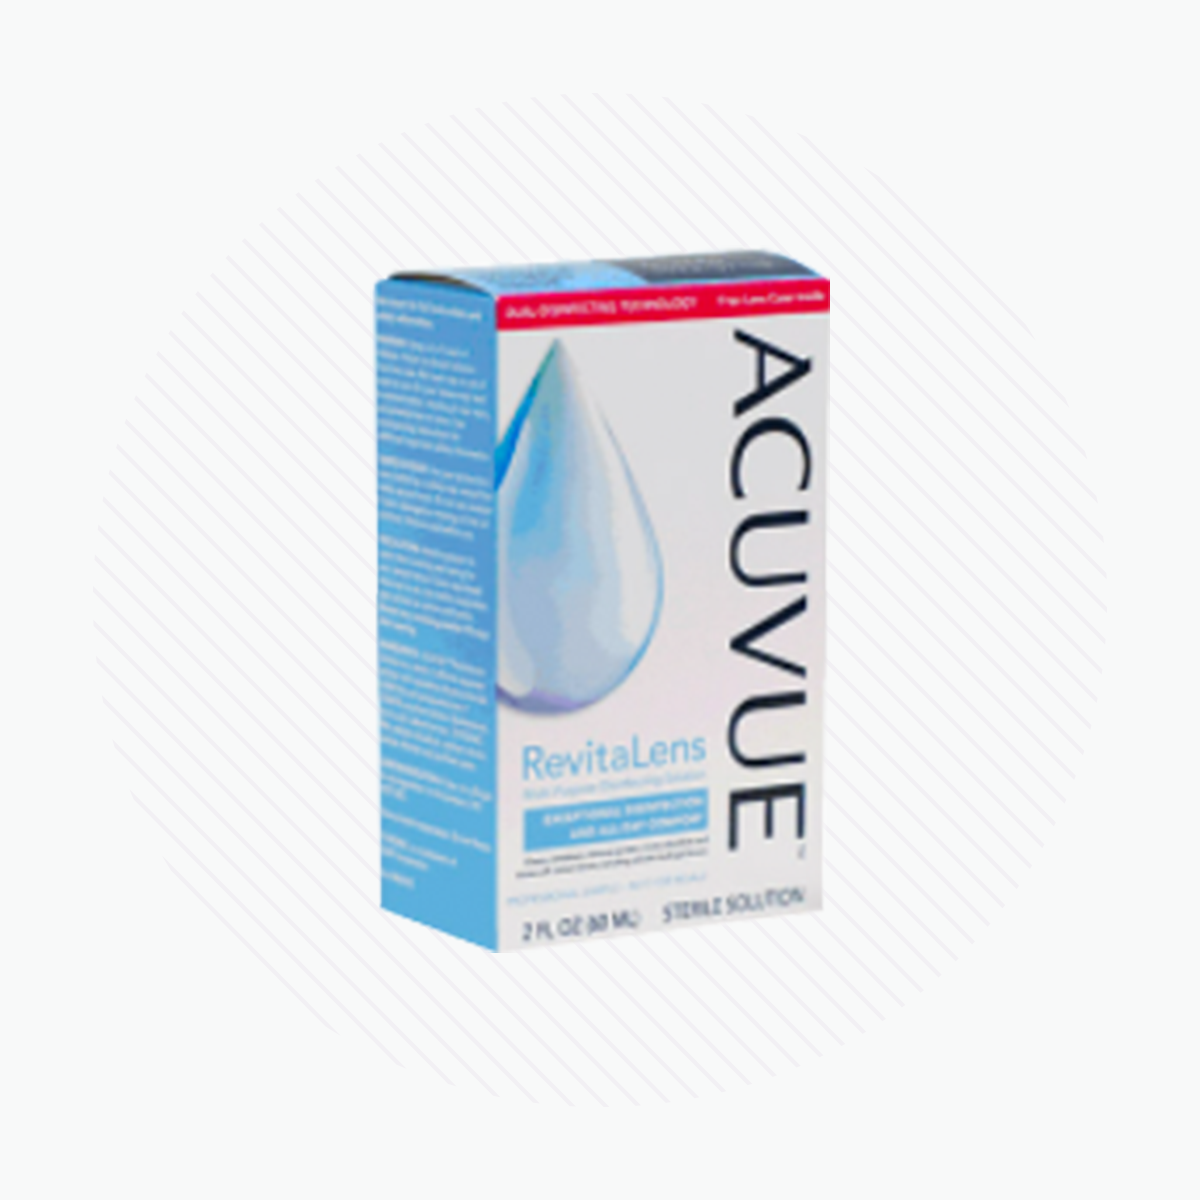 Acuvue RevitaLens Multi-Purpose Disinfecting Solution 2 oz - Travel - Doctor Sample